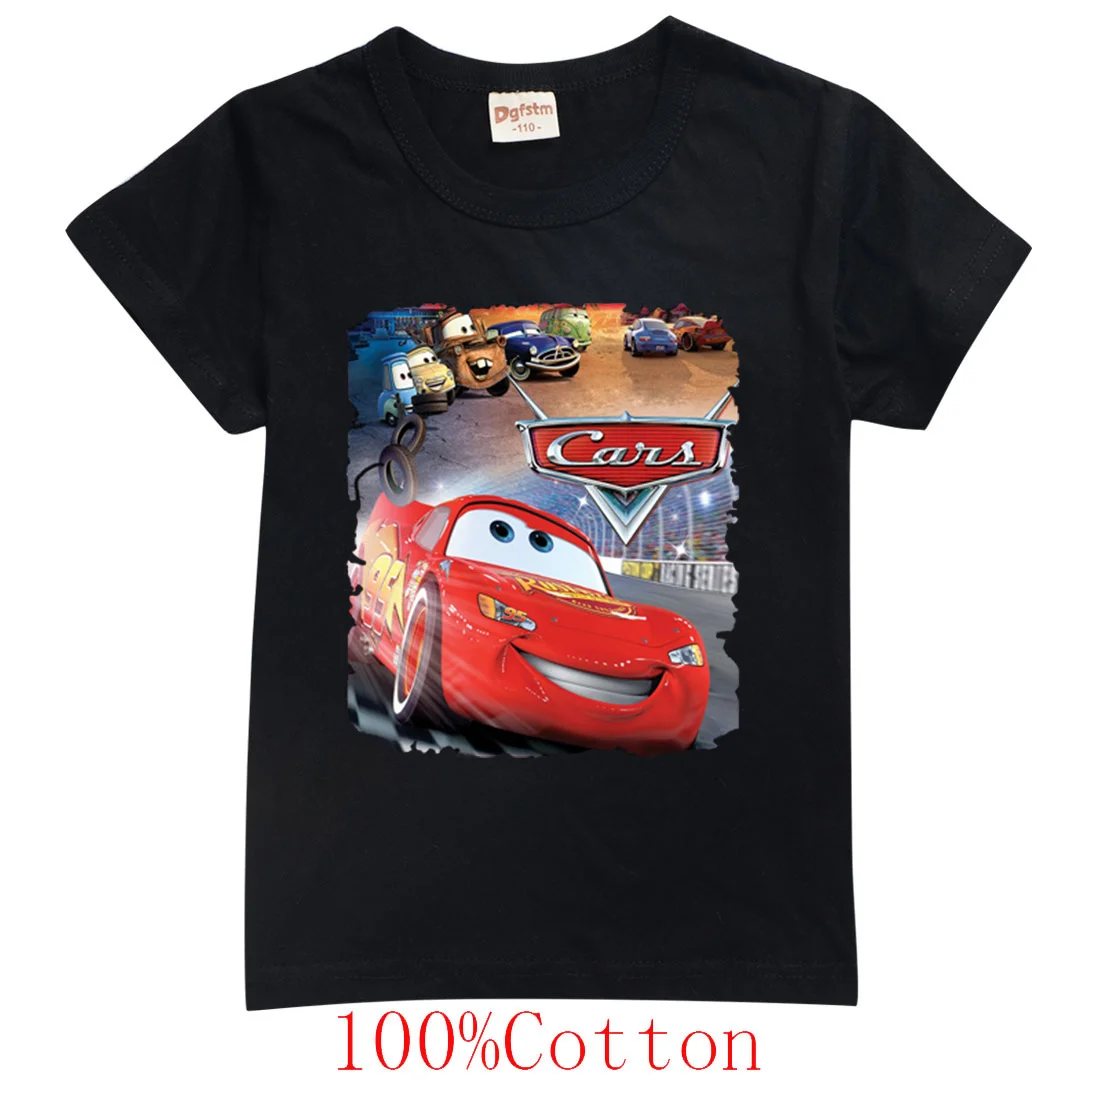 

Disney Pixar Cars Lightning McQueen Kids Clothes T Shirts Children Cartoons Casual Tops Boys Girls Teenager Outfits Tee Shirt